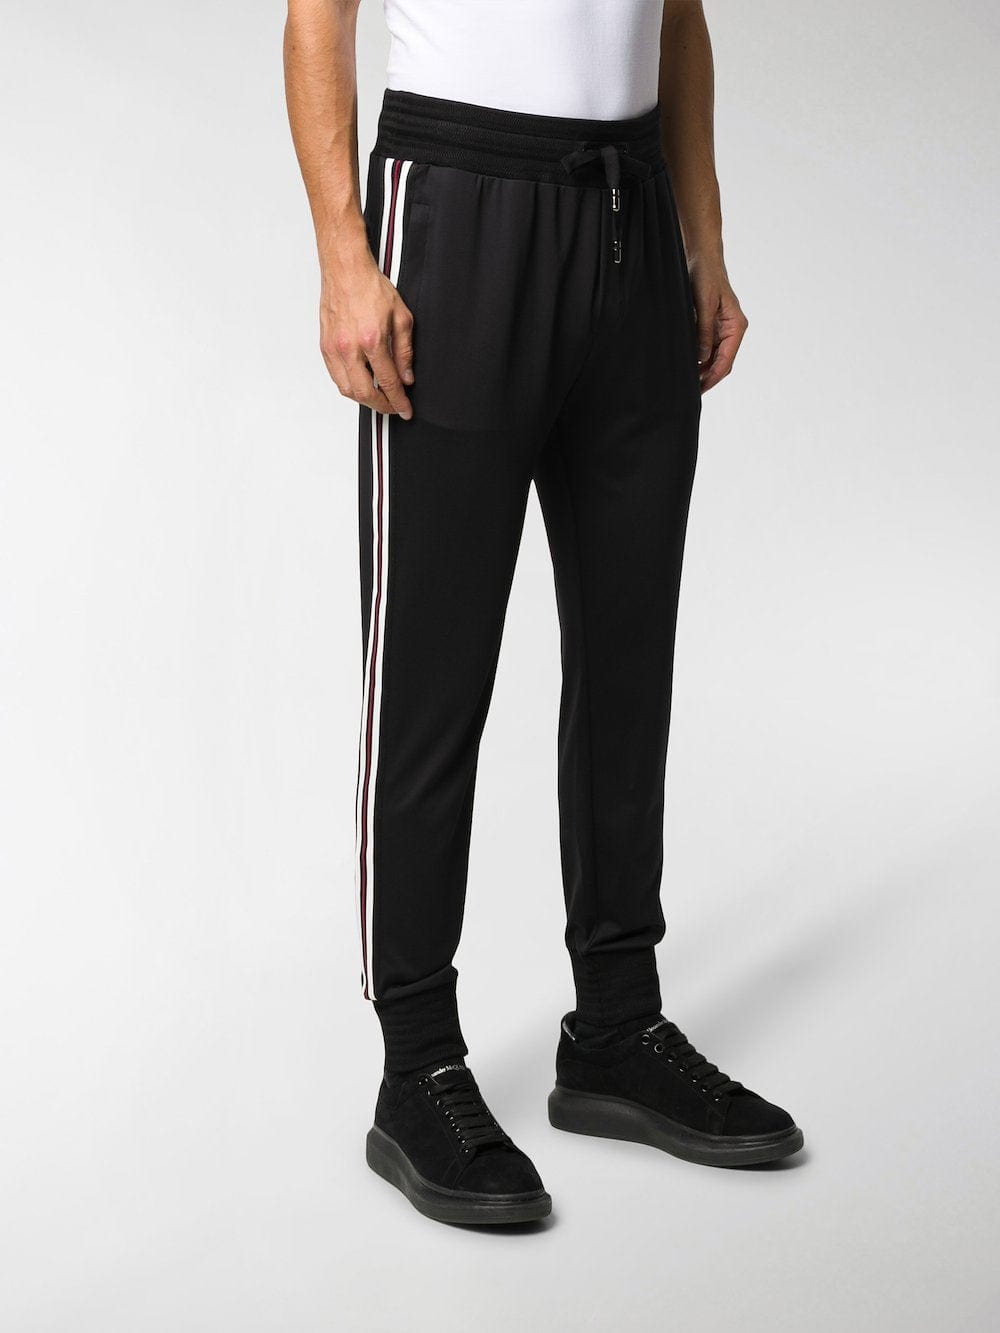 Dolce & Gabbana Striped Jogging Pants